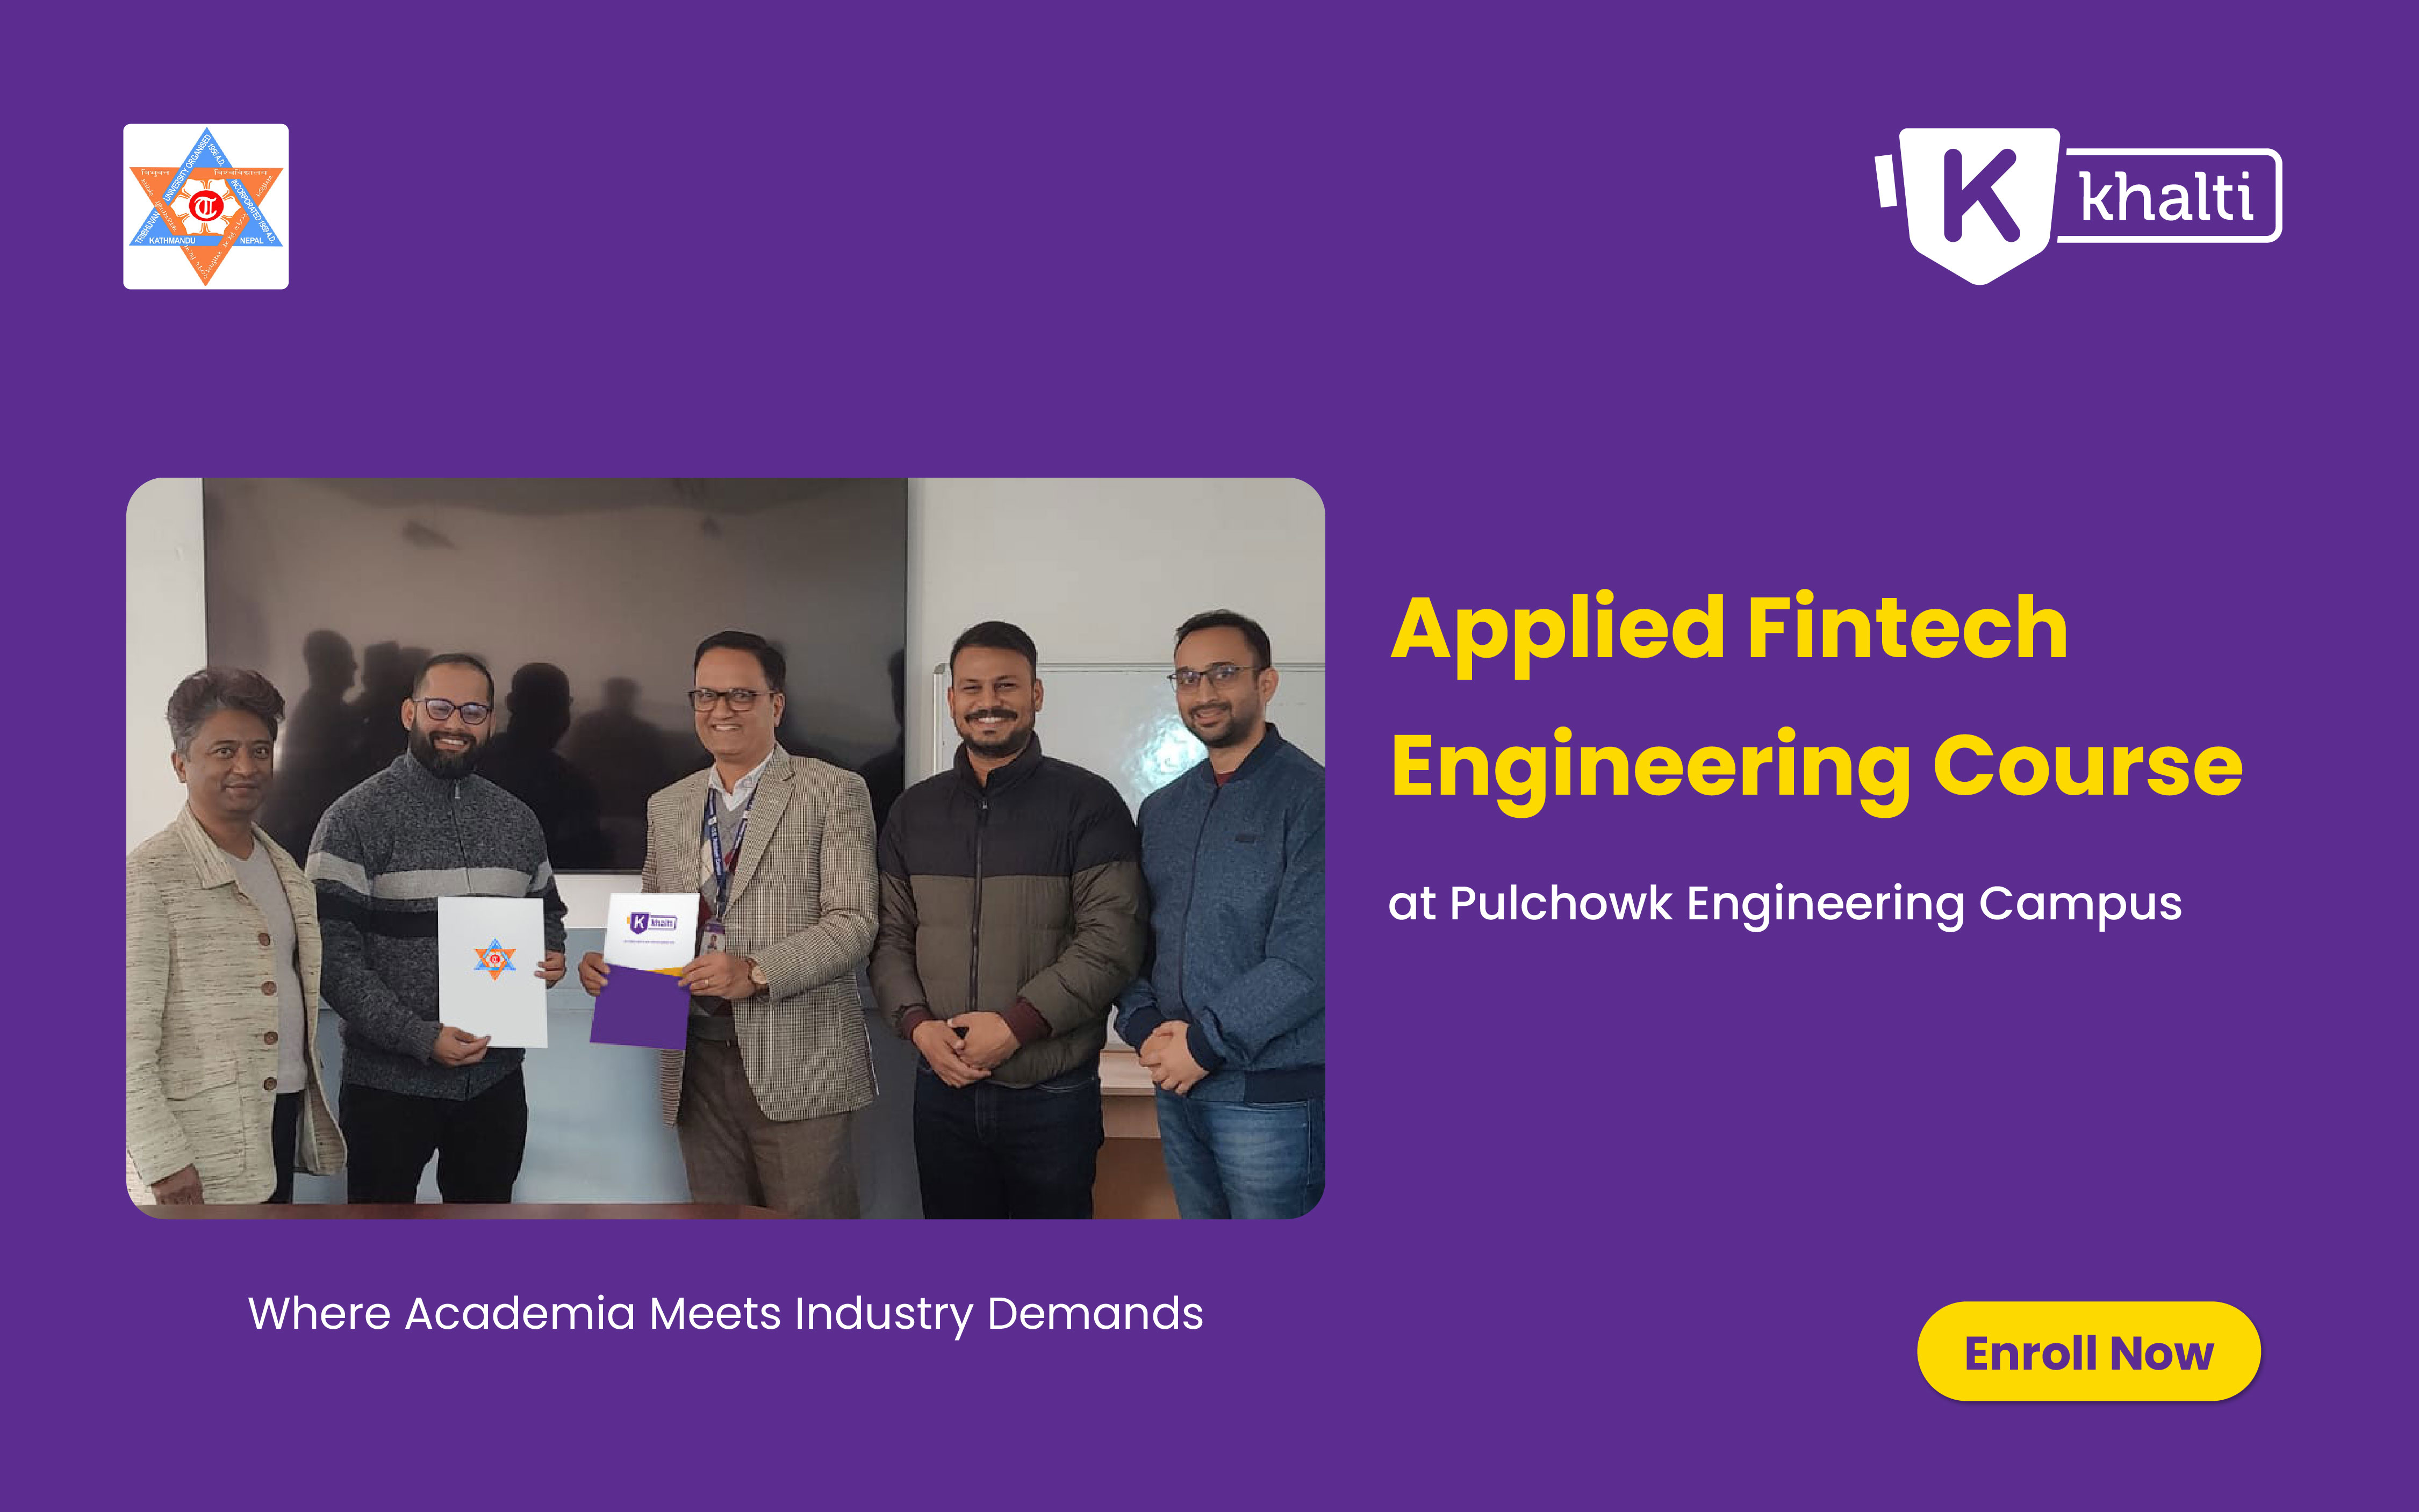 Khalti introduced ‘Applied Fintech Engineering’ in the IOE Pulchowk syllabus 